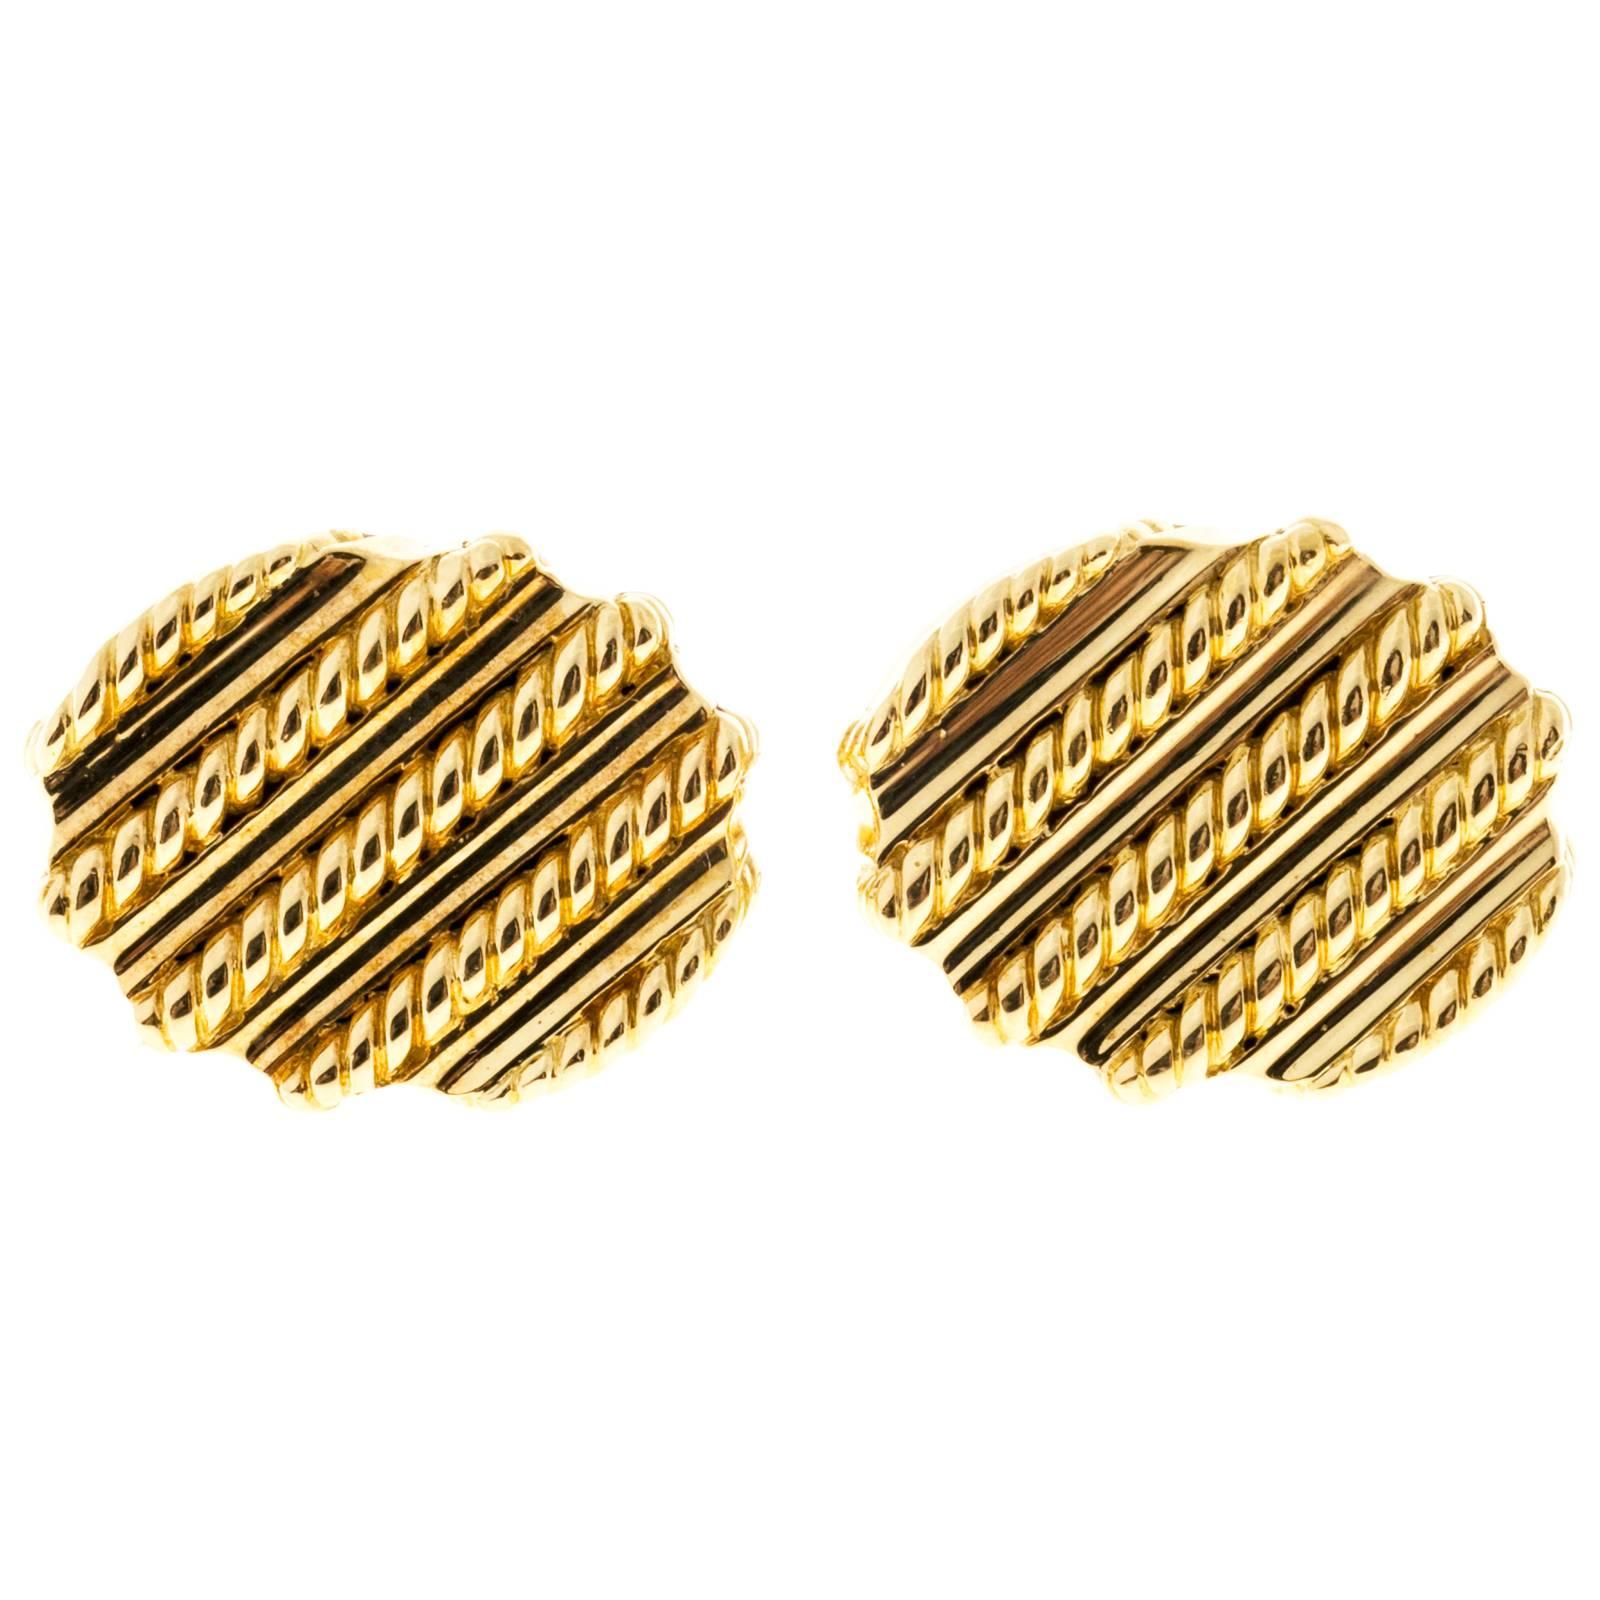 Tiffany & Co. Oval Gold Italian Twisted Wire Cufflinks